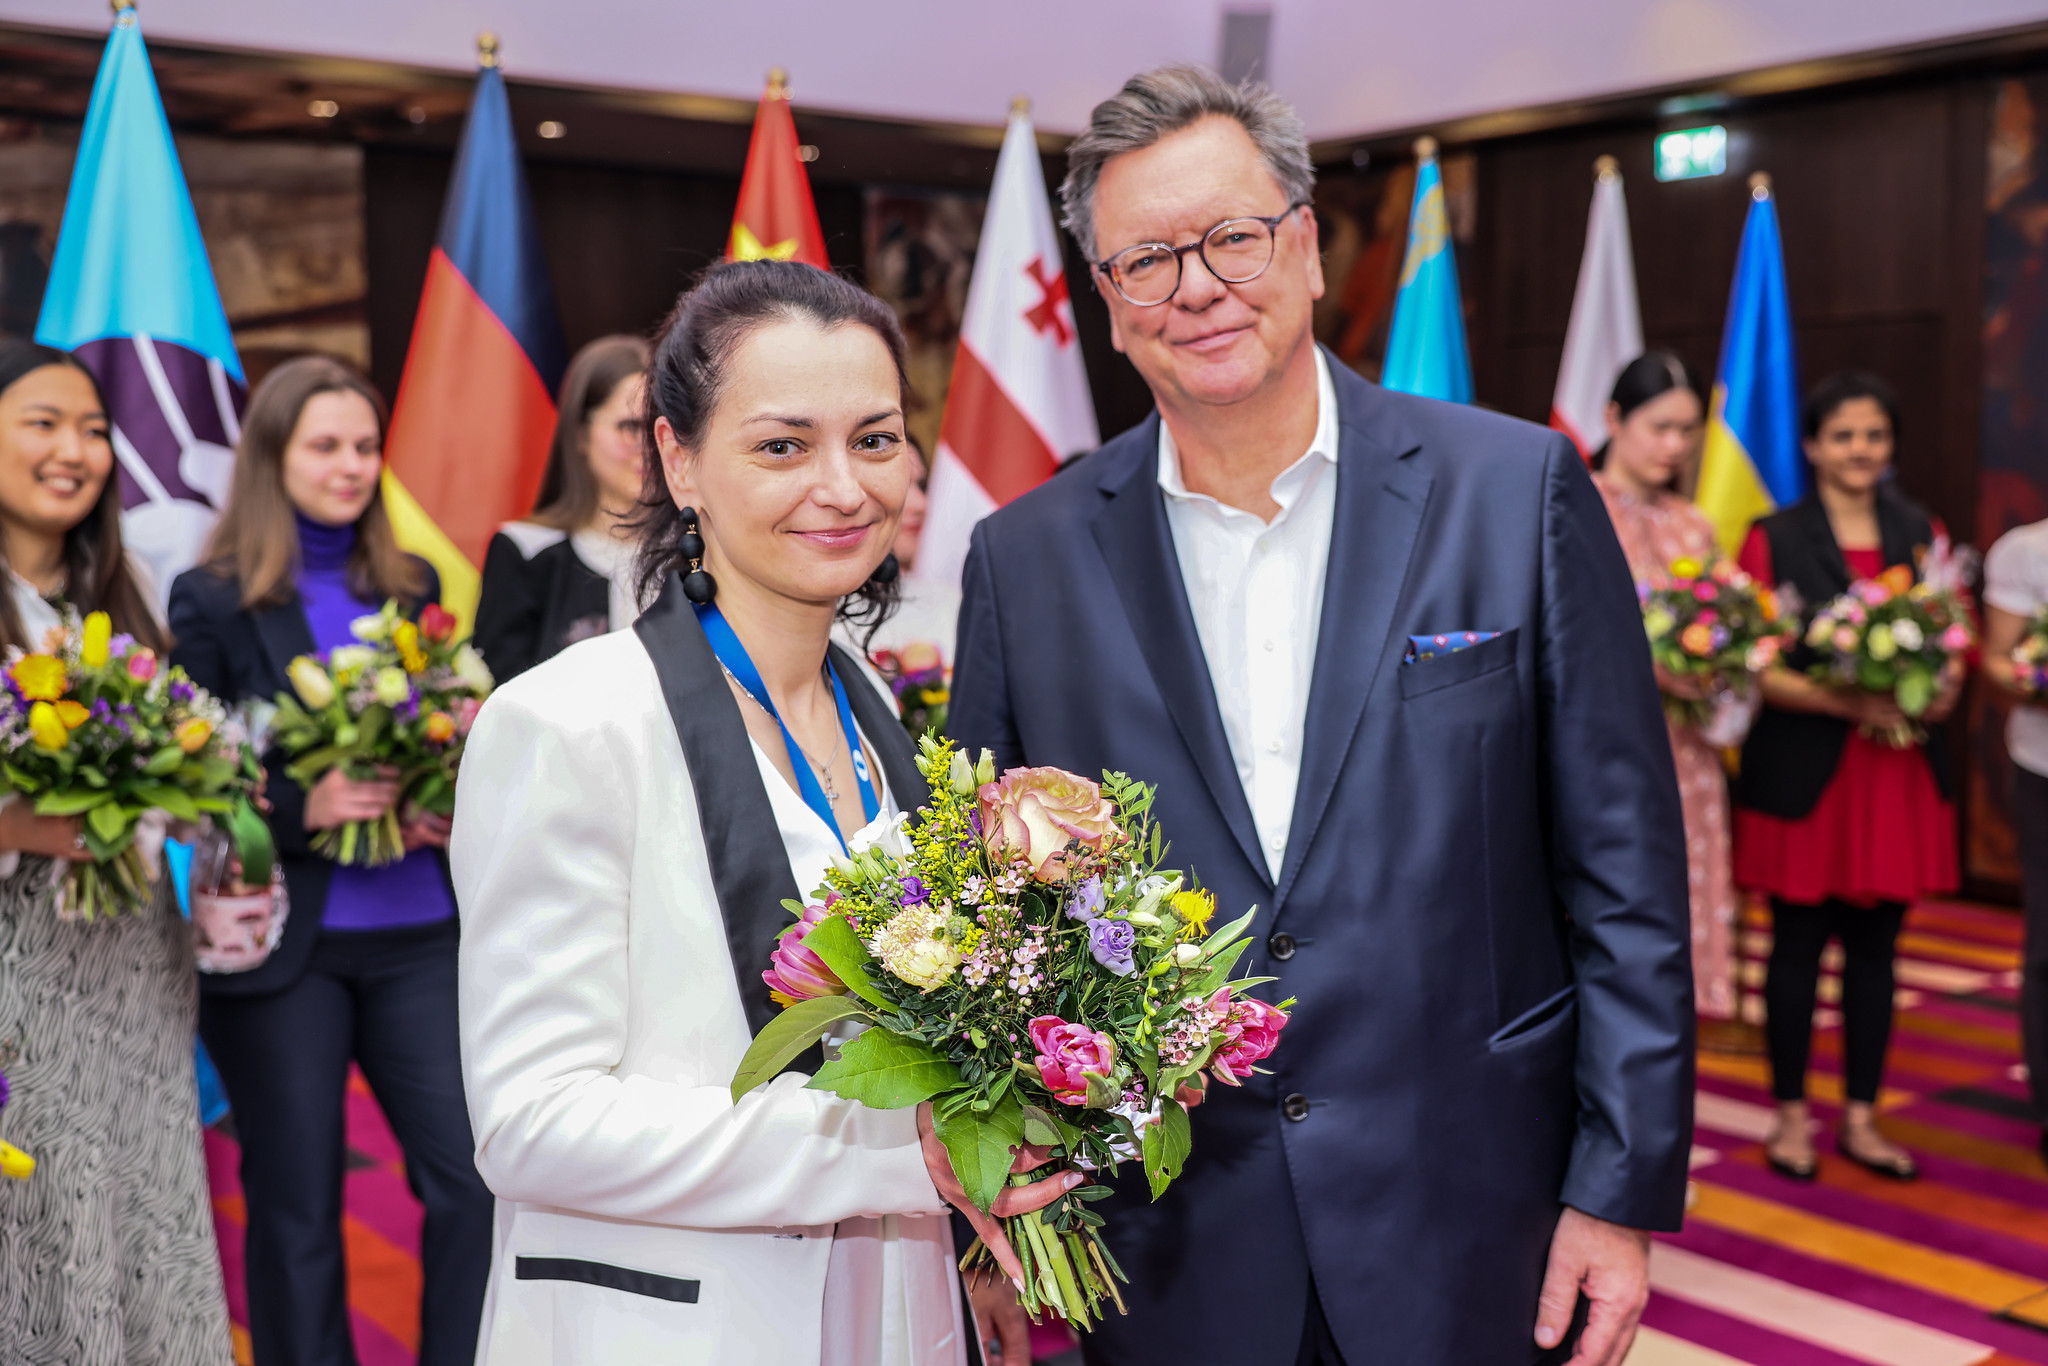 Alexandra Kosteniuk won the FIDE Women's Grand Prix event in Munich with 7.5 points ©FIDE/Mark Livshitsz